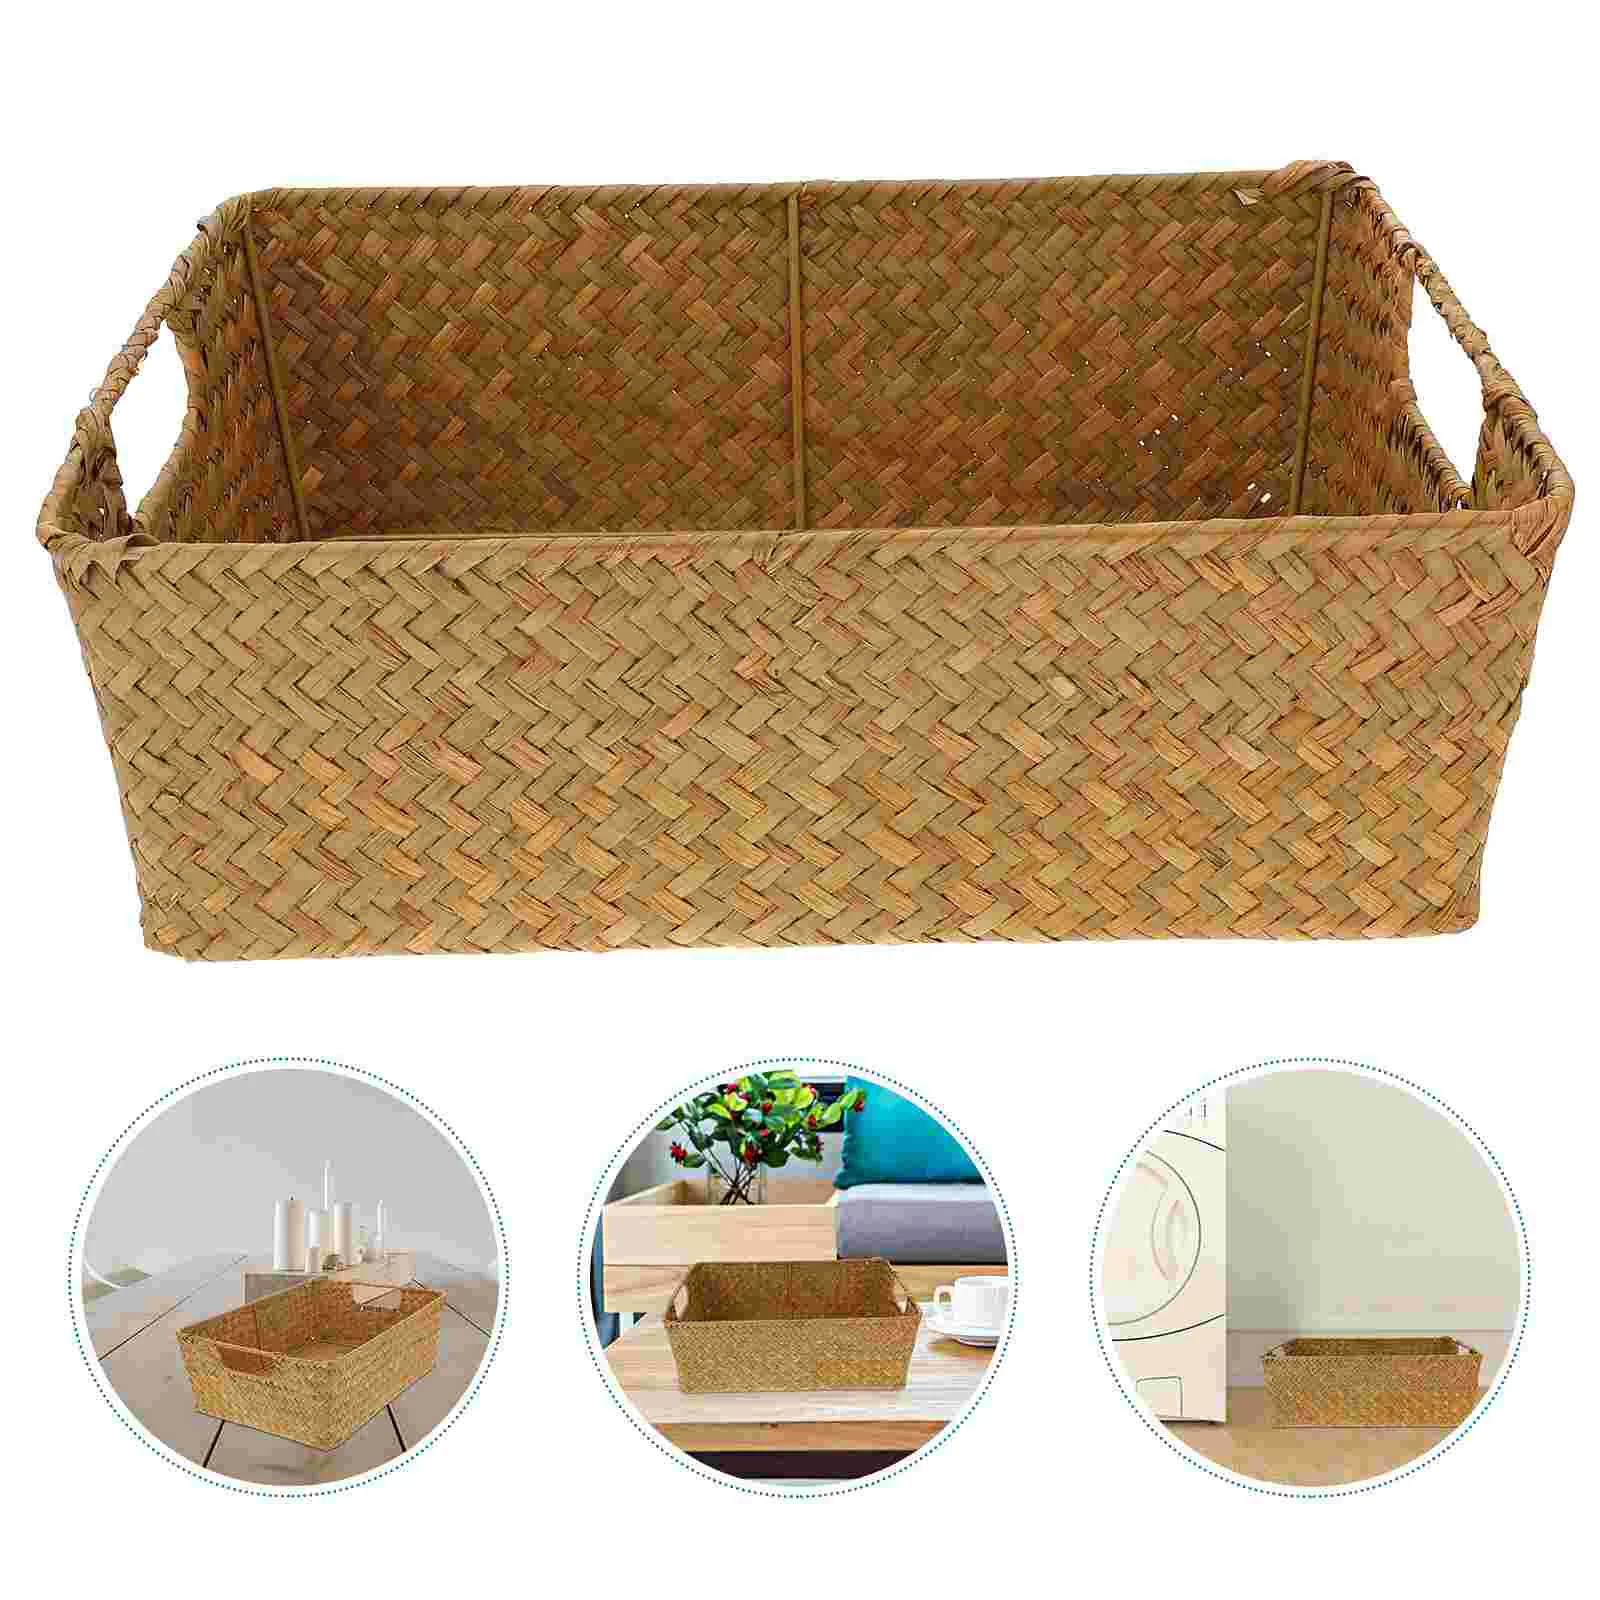 

Basket Storage Baskets Wicker Woven Seagrass Organizer Rattan Fruit Bins Bin Hamper Rectangular Large Seaweed Box Laundry